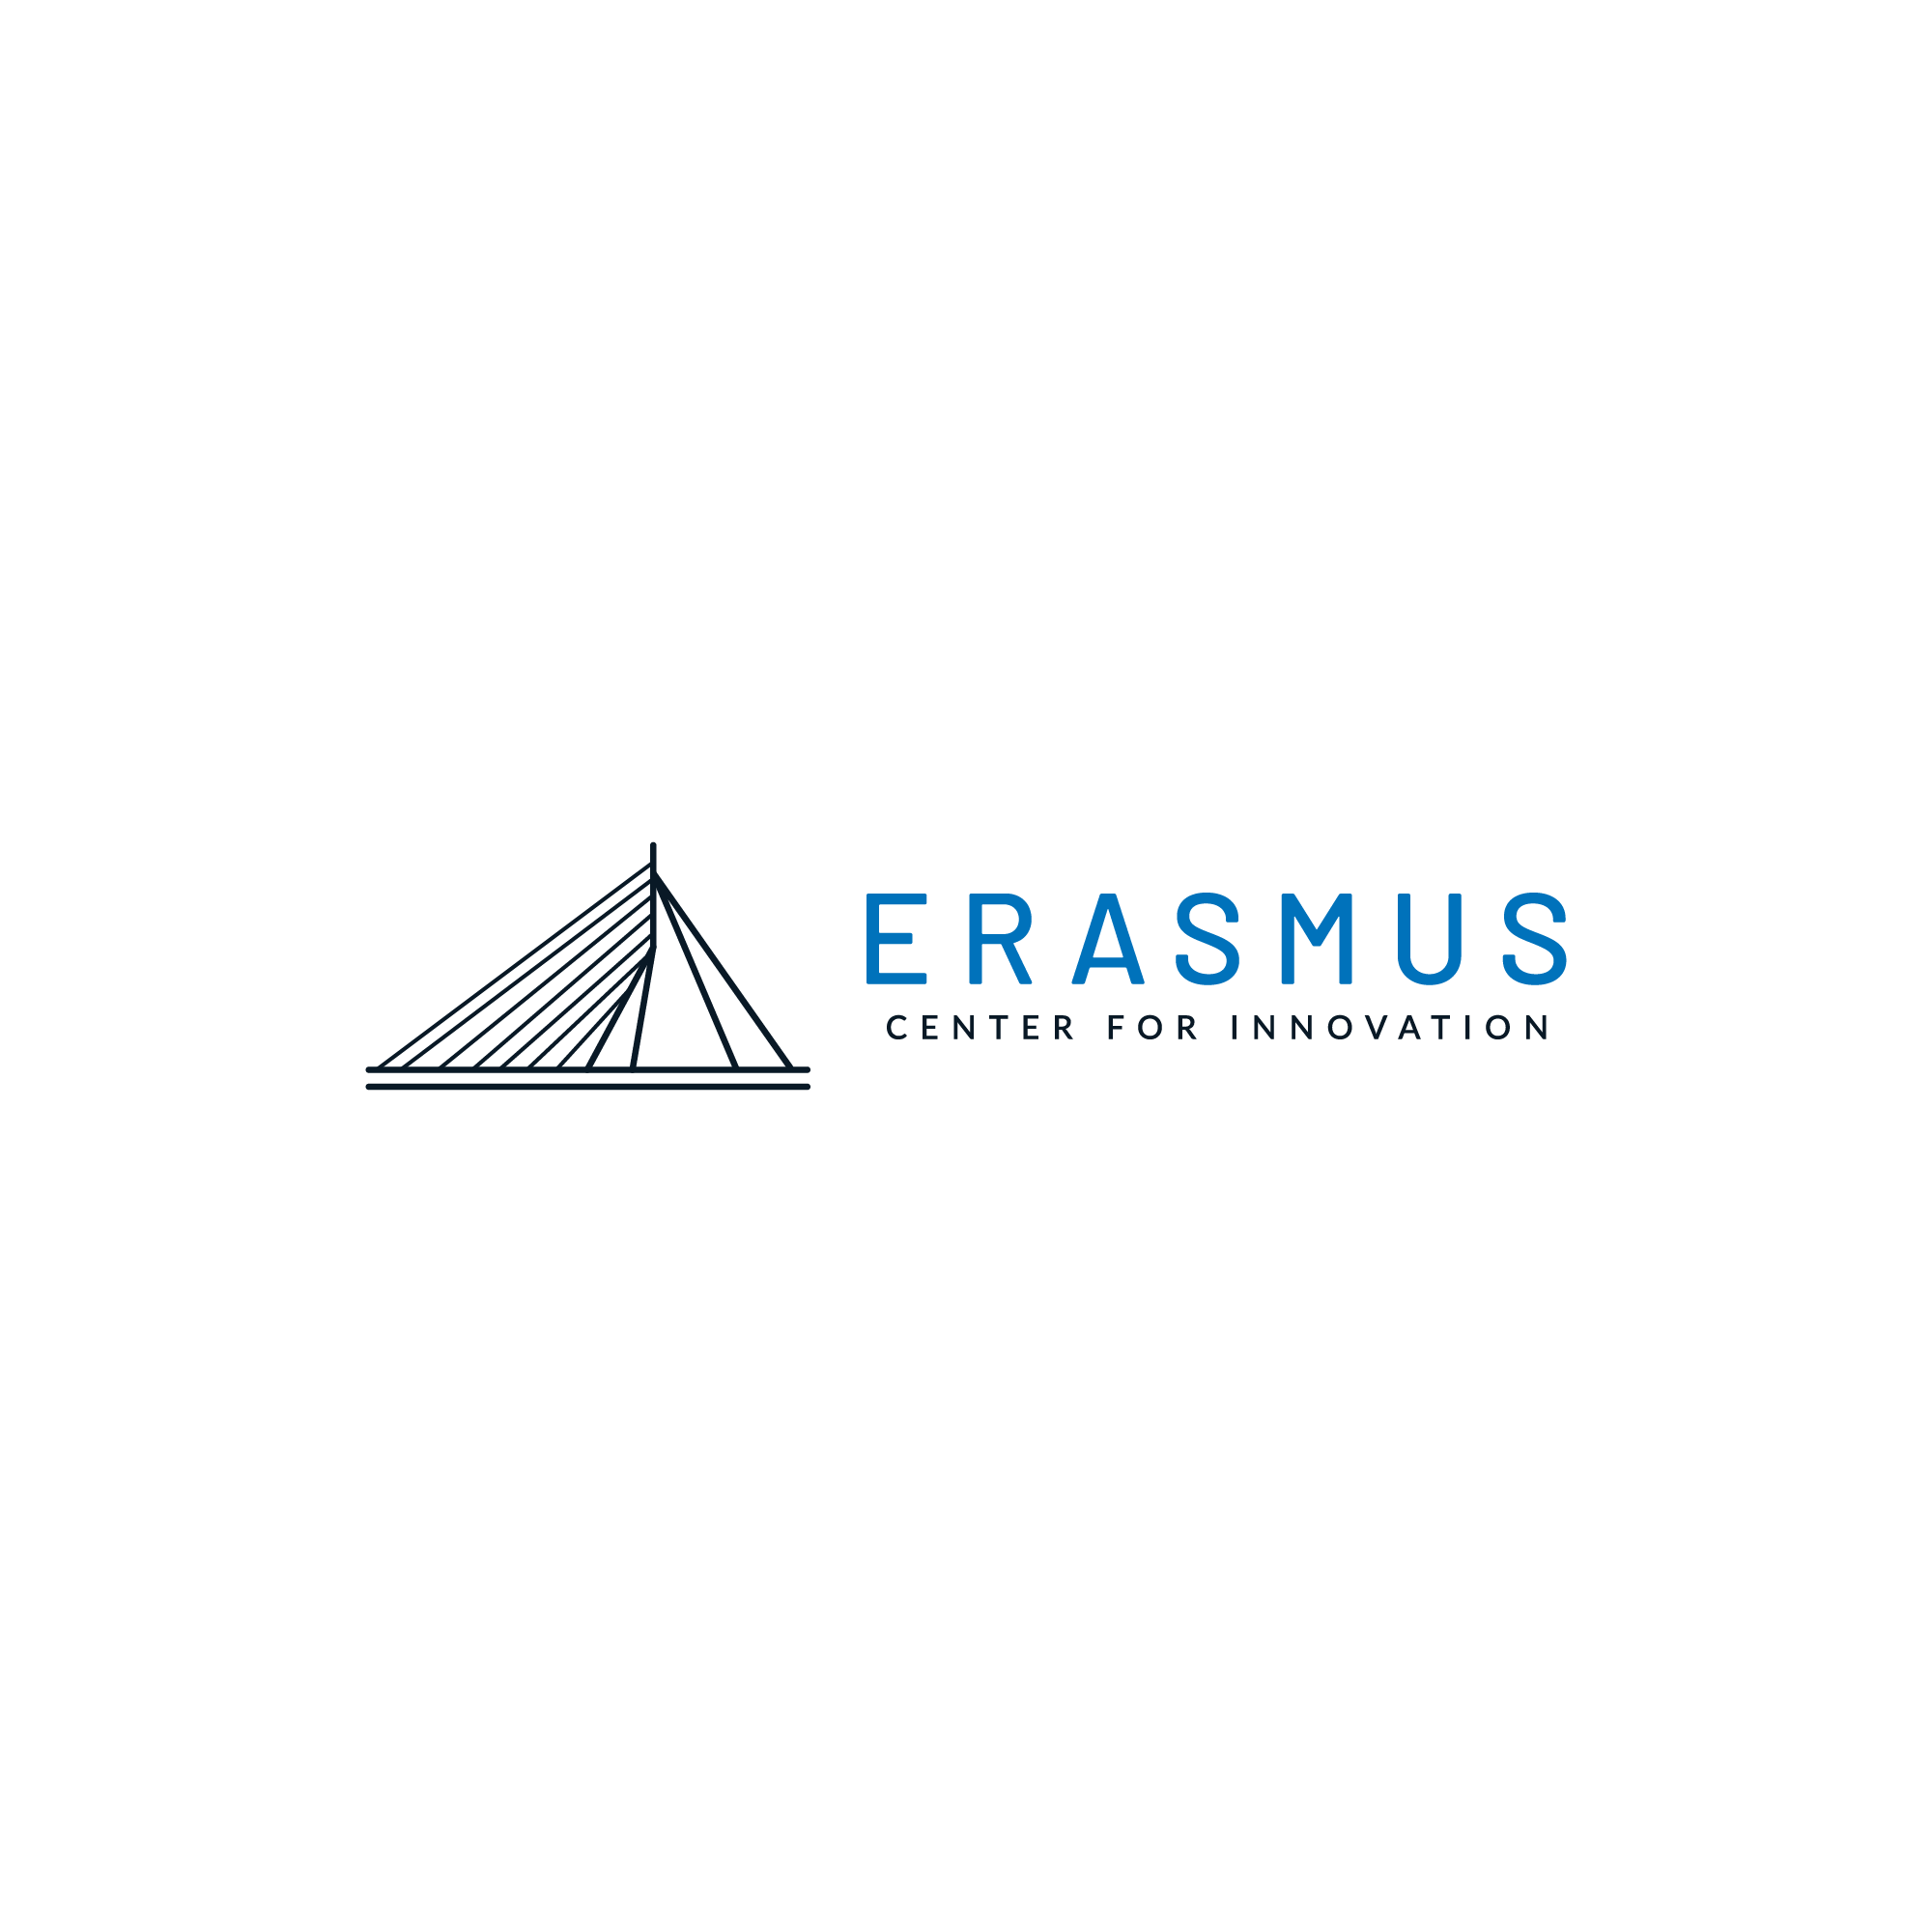 Erasmus Center for Innovation logo